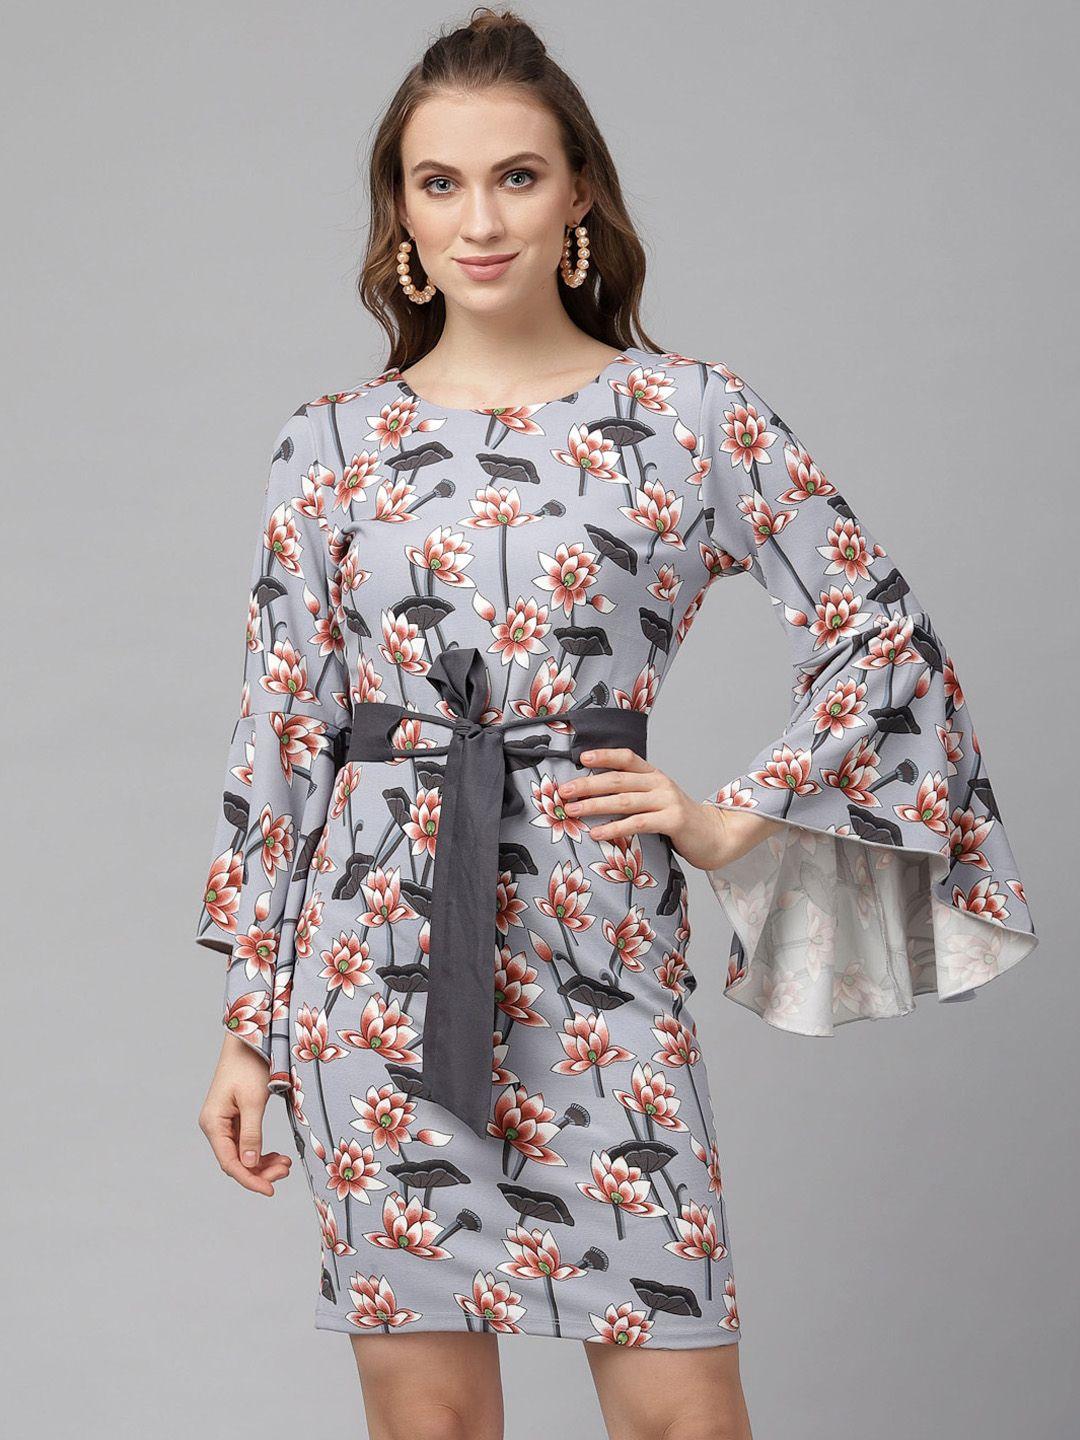 kassually women grey printed sheath dress